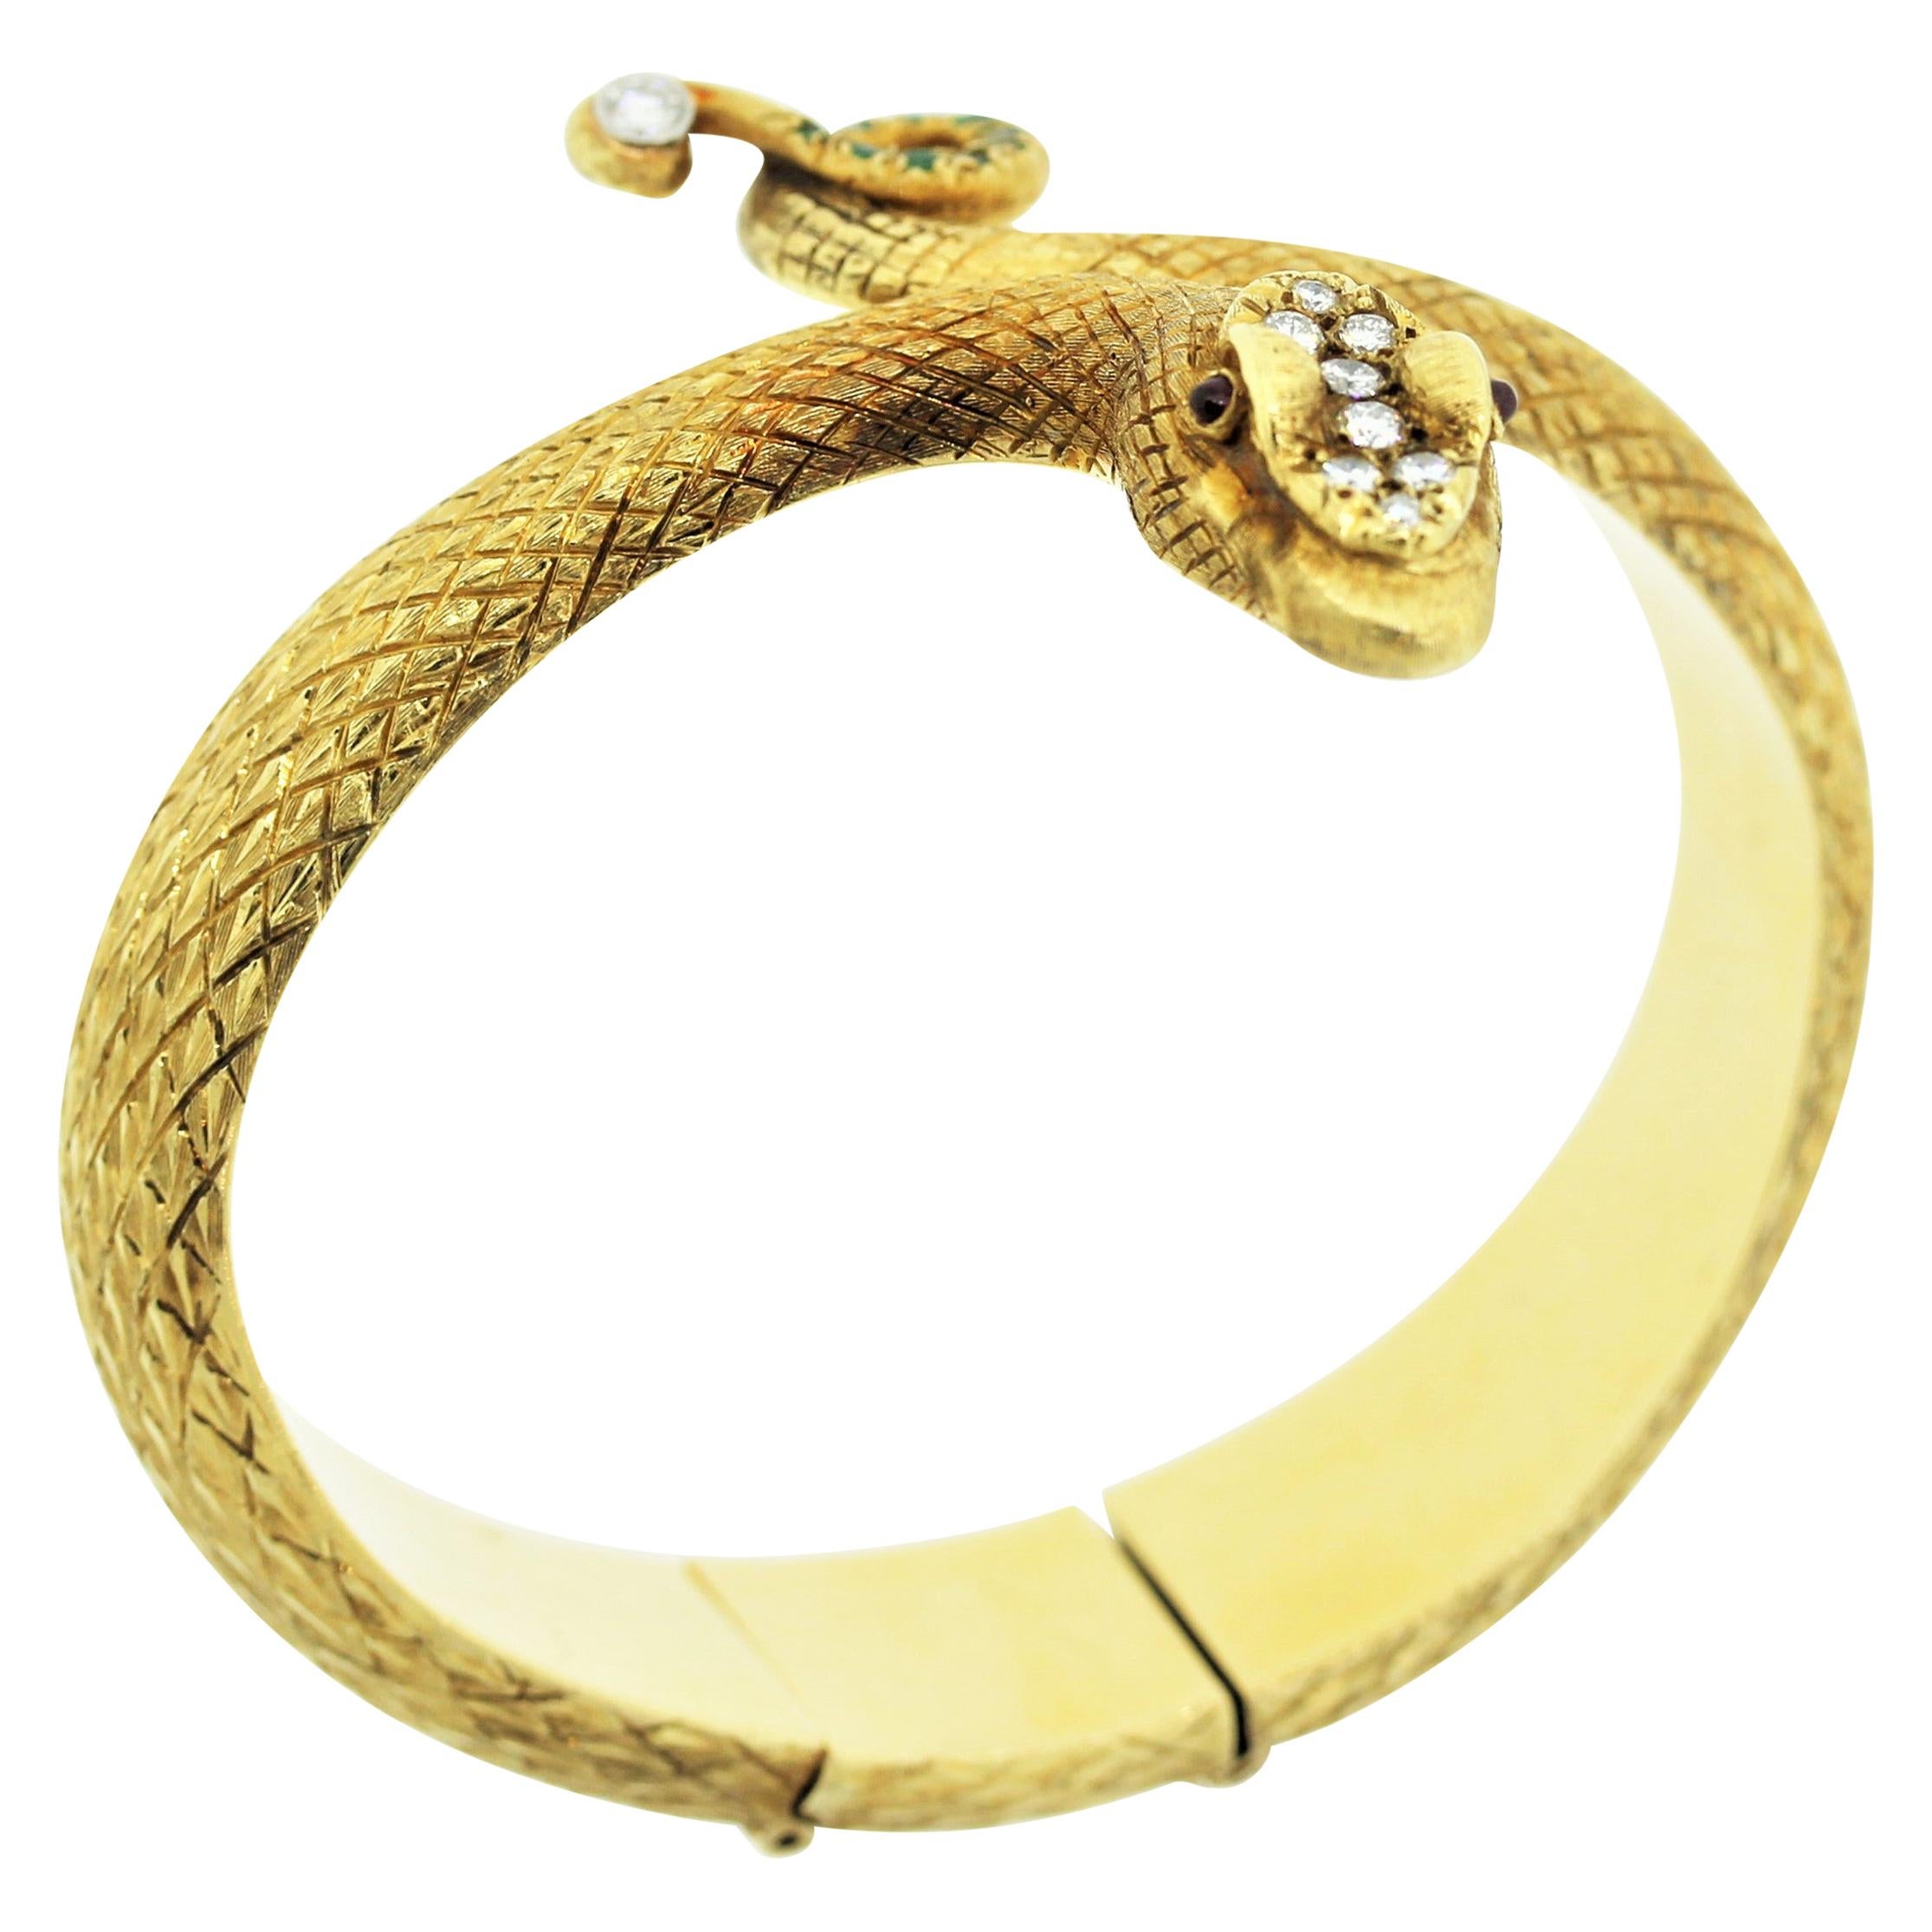 Cellino Cellino Diamant Edelstein Gold Schlangenarmreif Armband im Angebot